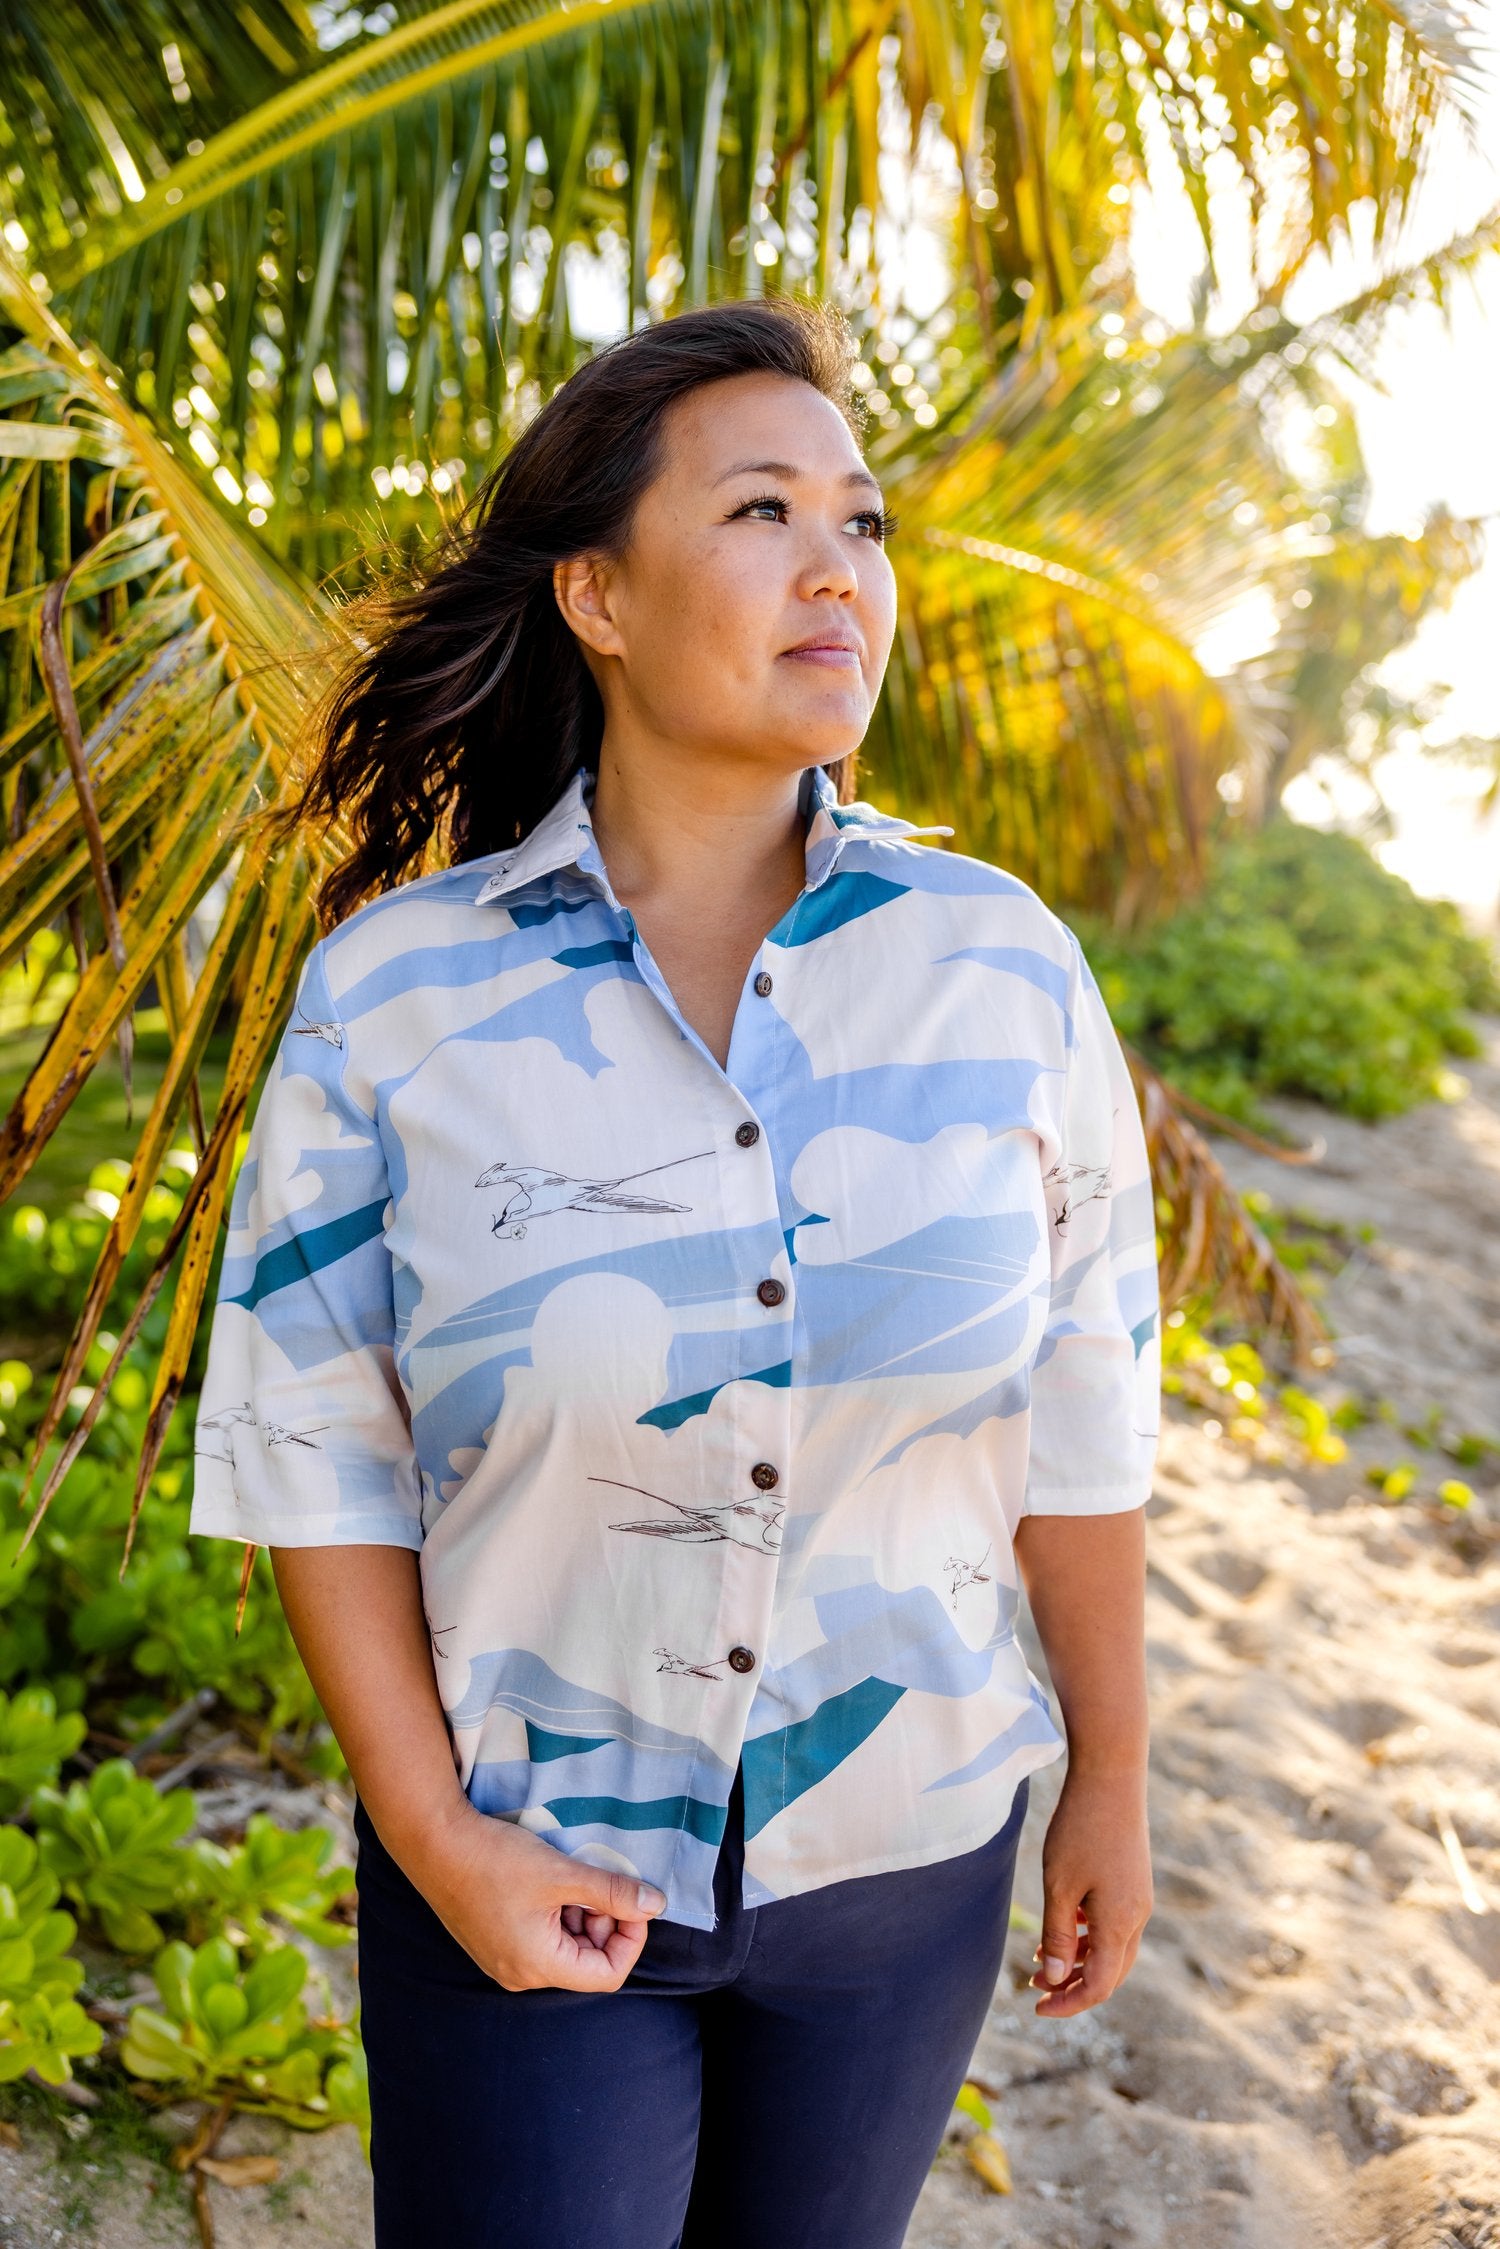 Pop-Up Mākeke - David Shepard Hawaii - Soaring Koa'Kea Women's Half Sleeve Aloha Shirt - Front View